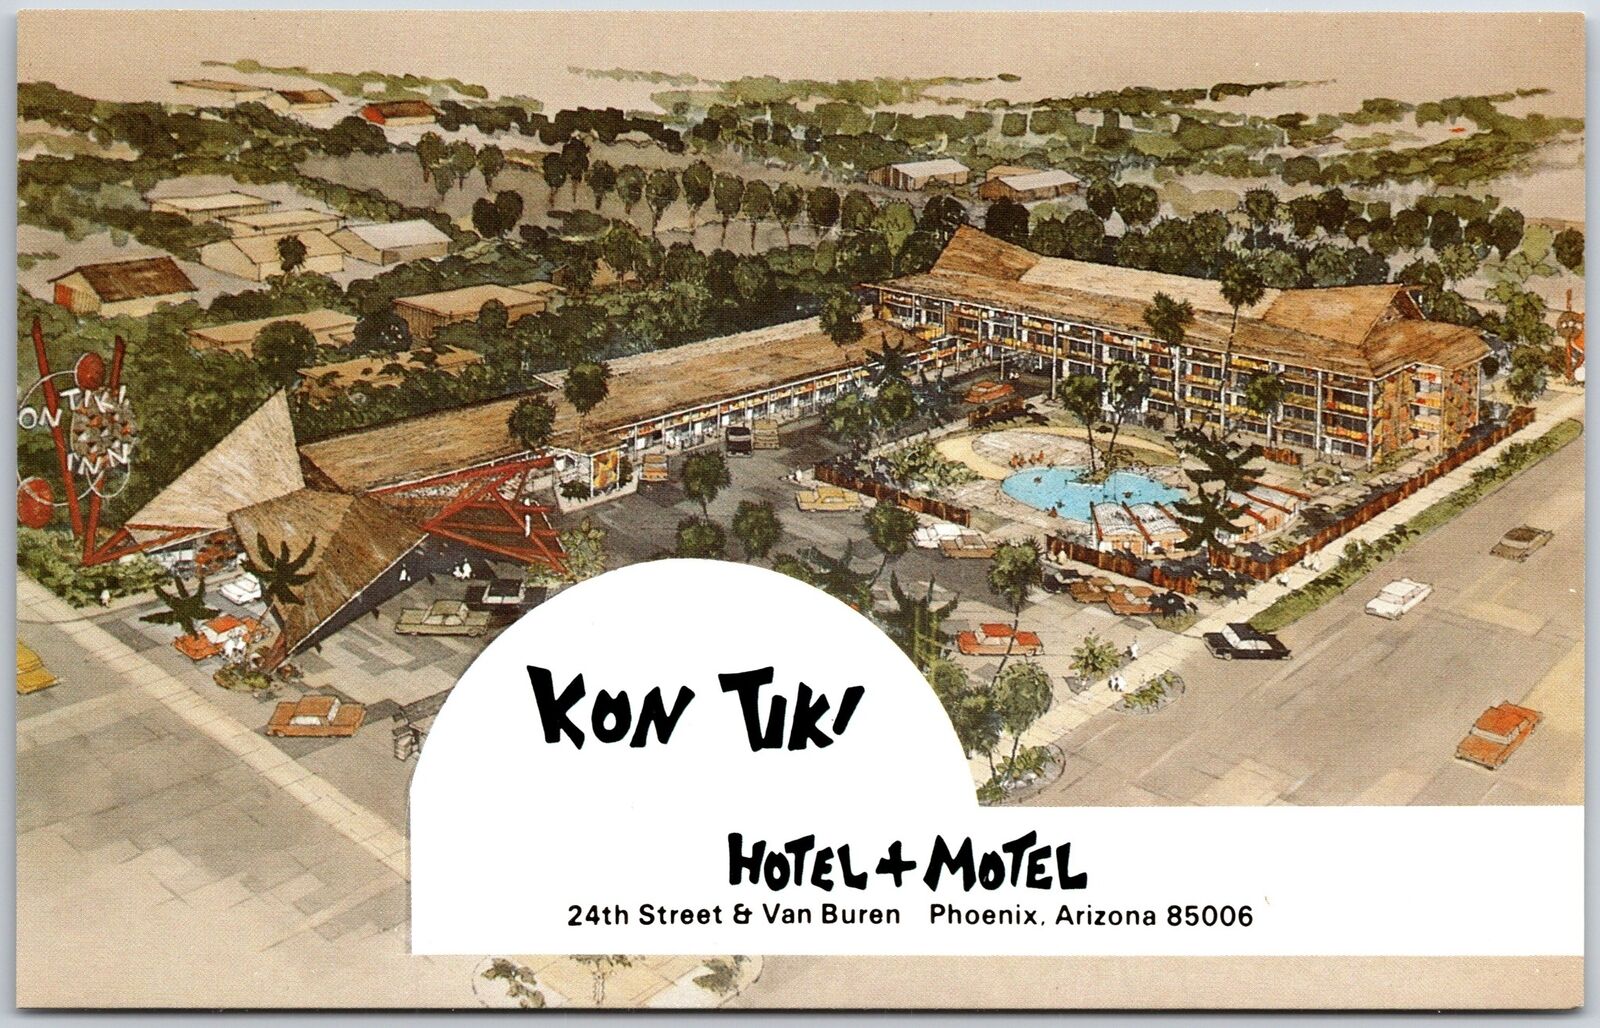 Kon Tiki Hotel And Motel 24th Sreet & Van Buren Phoenix Arizona Aerial Postcard